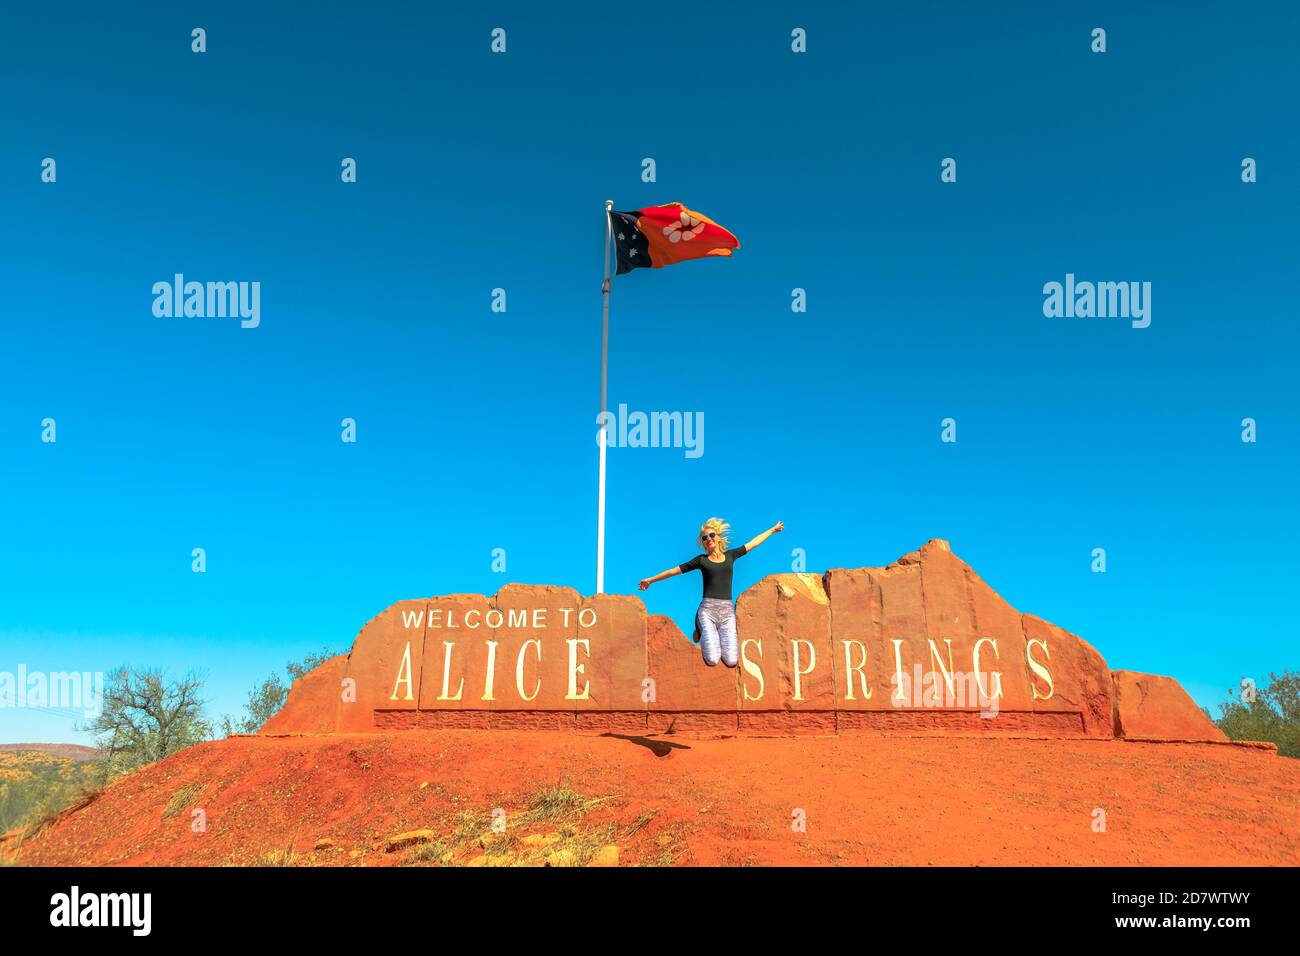 Carefree turista donna jumping a Alice Springs Welcome Sign in Northern Territory, Central Australia. Turismo nel deserto dell'Outback Red Centre. Viaggi Foto Stock